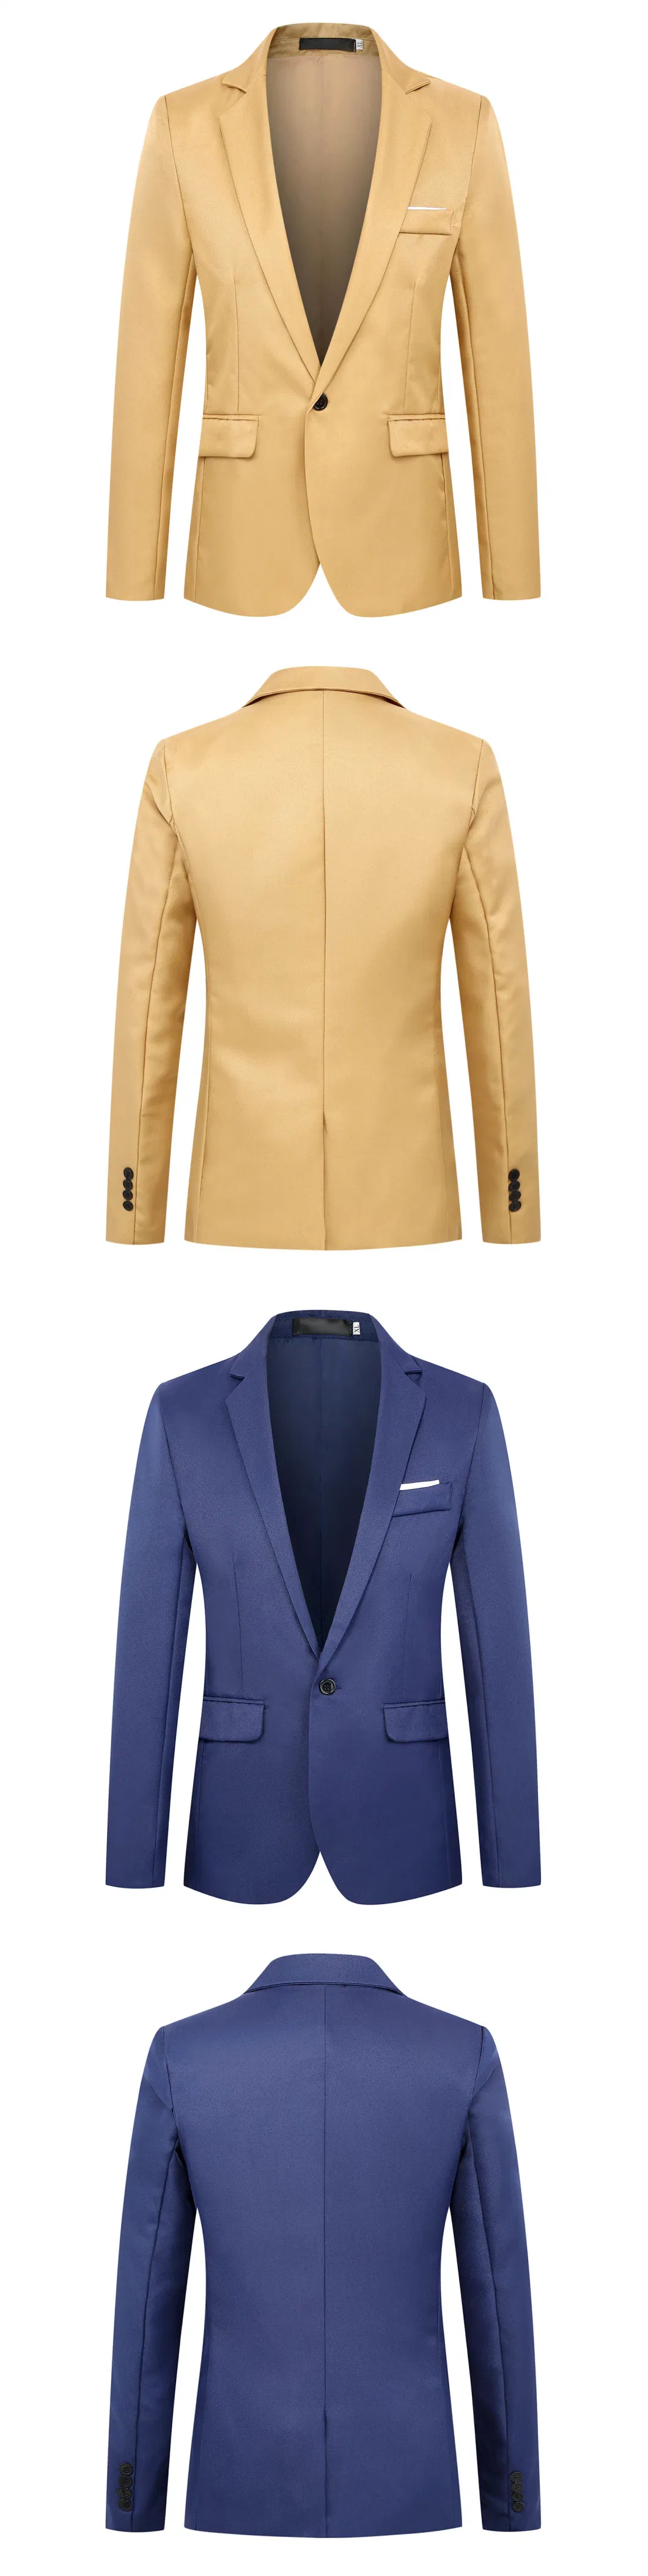 New Men&prime;s Suit Fashion Trend Inventory Casual Slim Fit Four Seasons Solid Color Small Suit Men&prime;s Outerwear